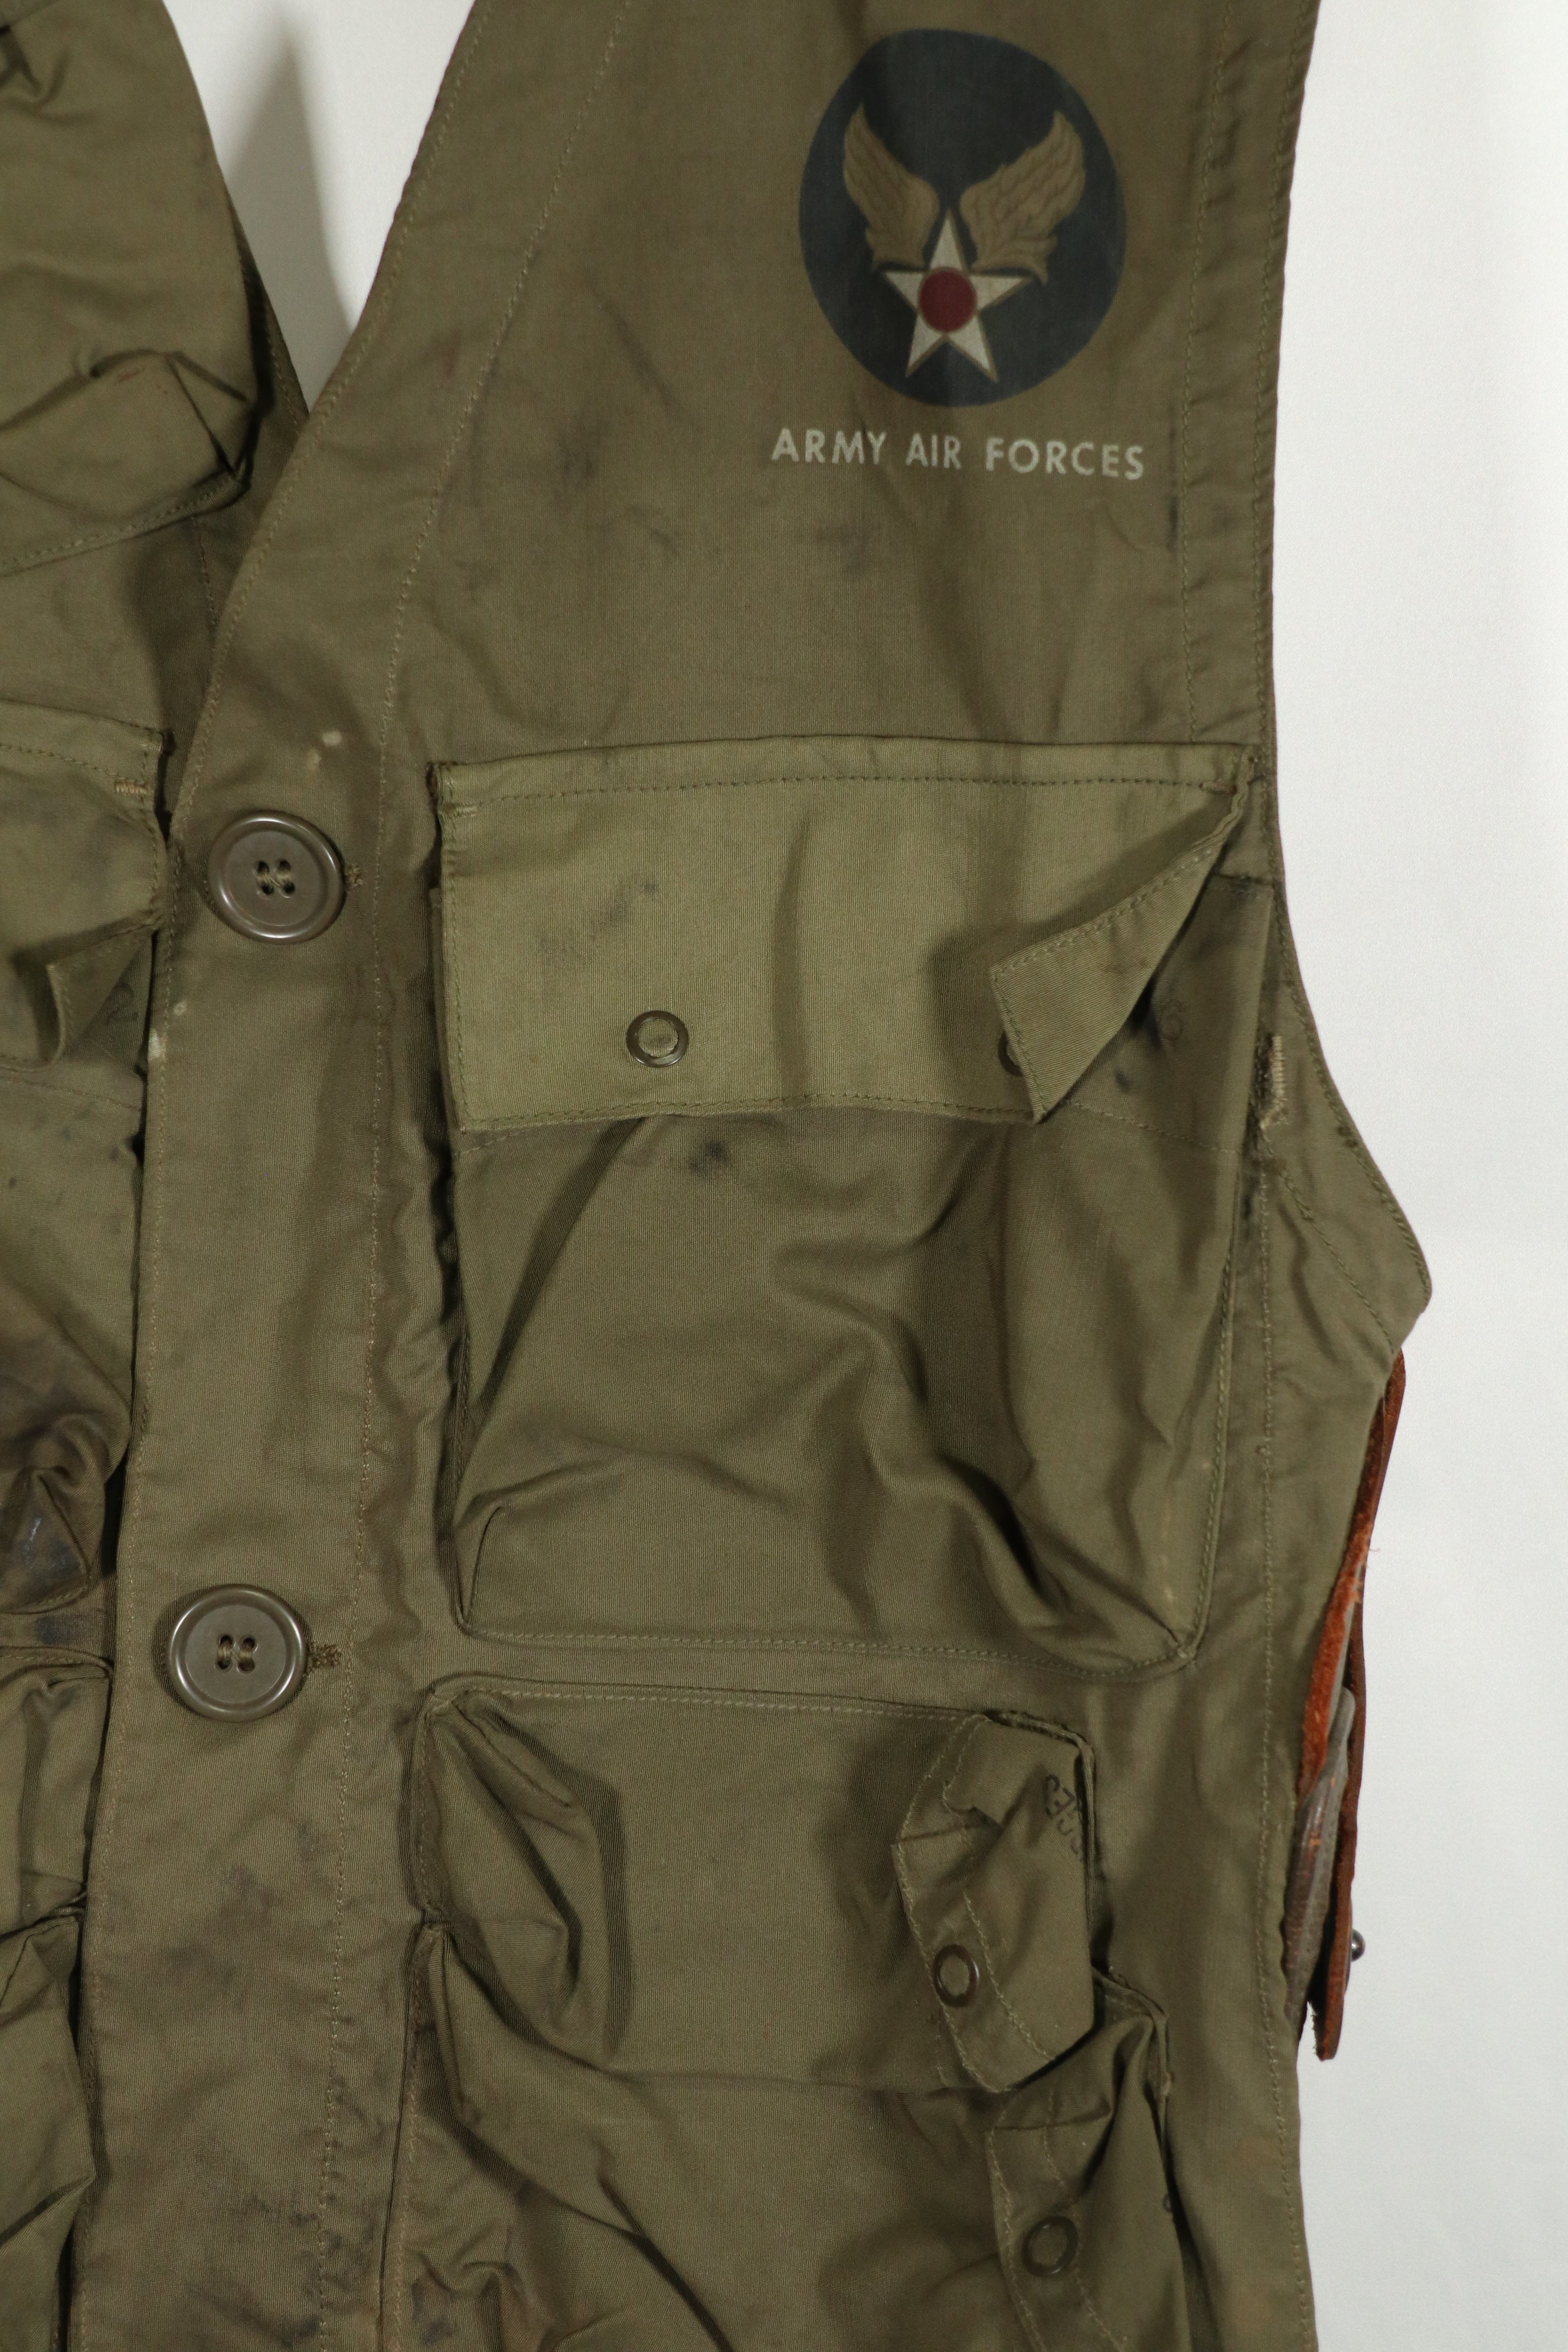 Real 1940s U.S. Army Air Force AAF C-1 Survival Vest, used.